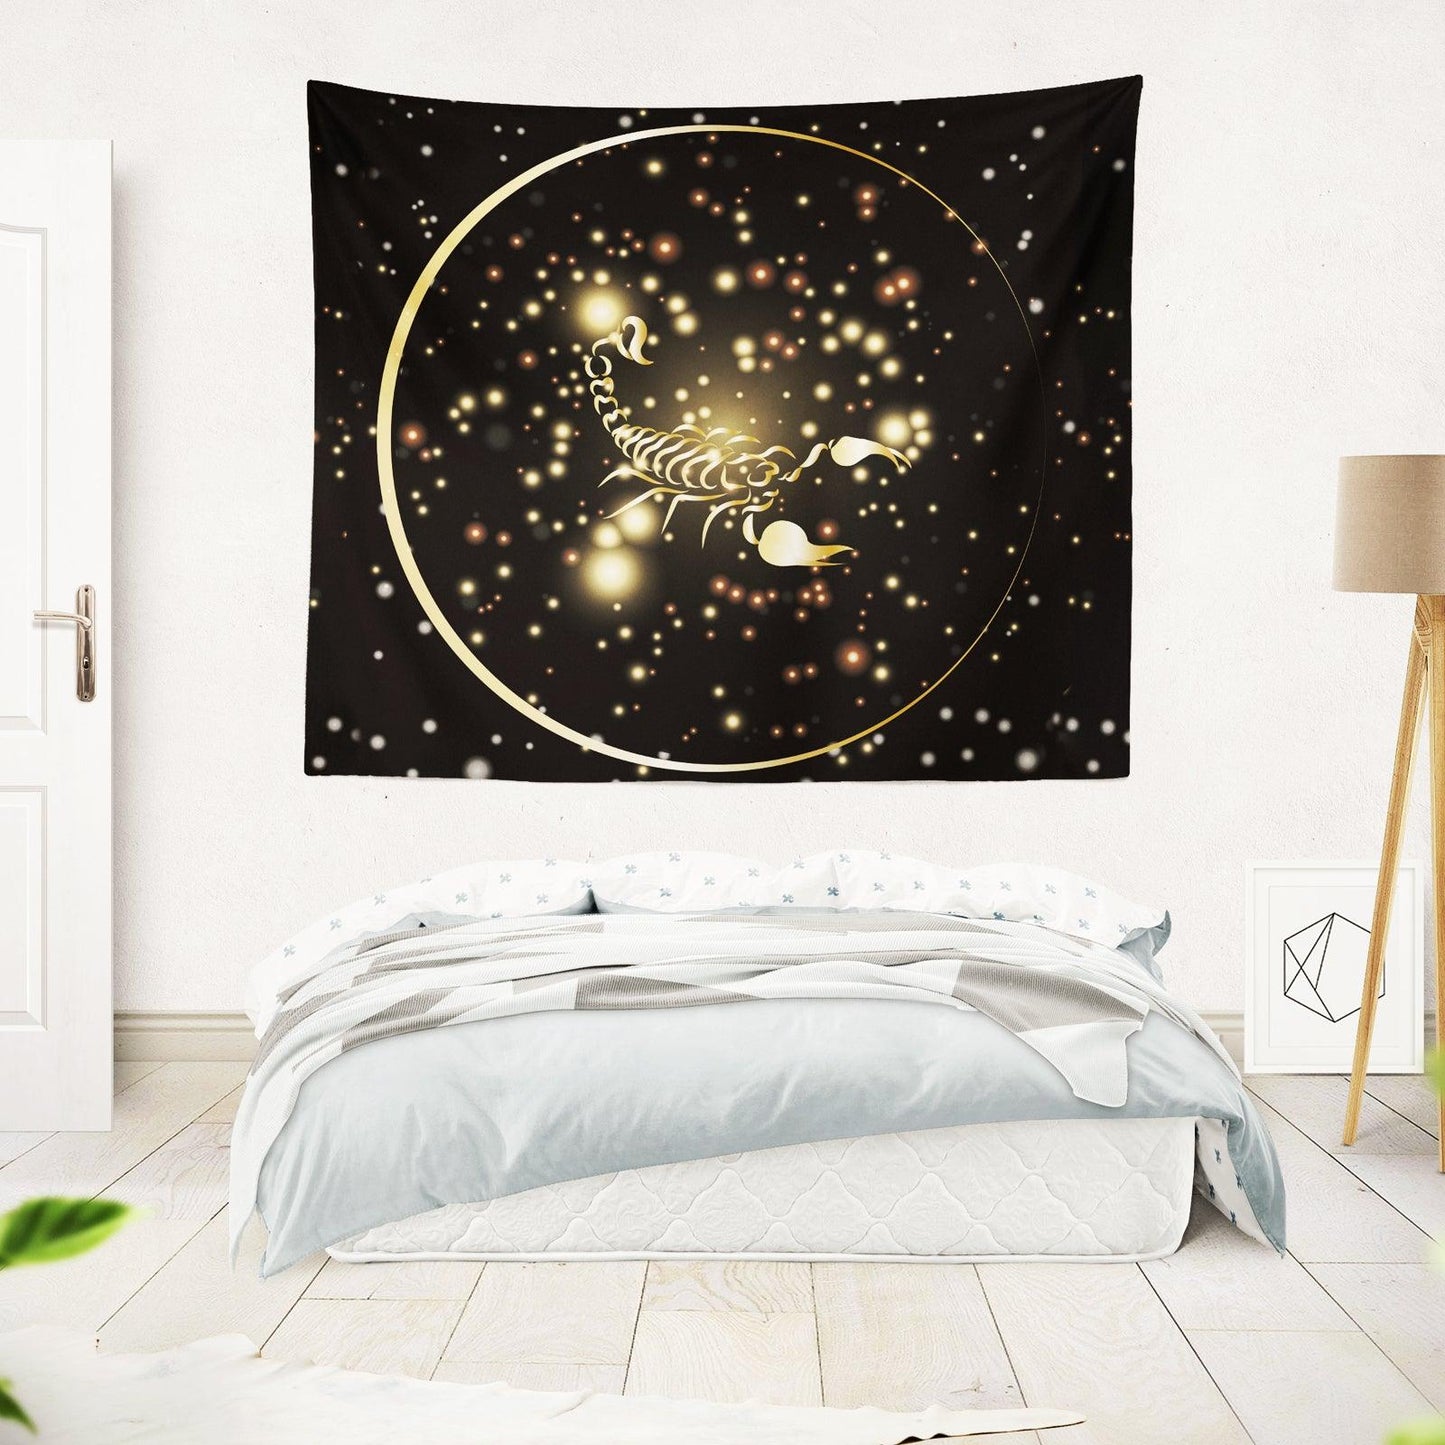 Constellations Zodiac Tapestry (Scorpio) - Berkin Arts